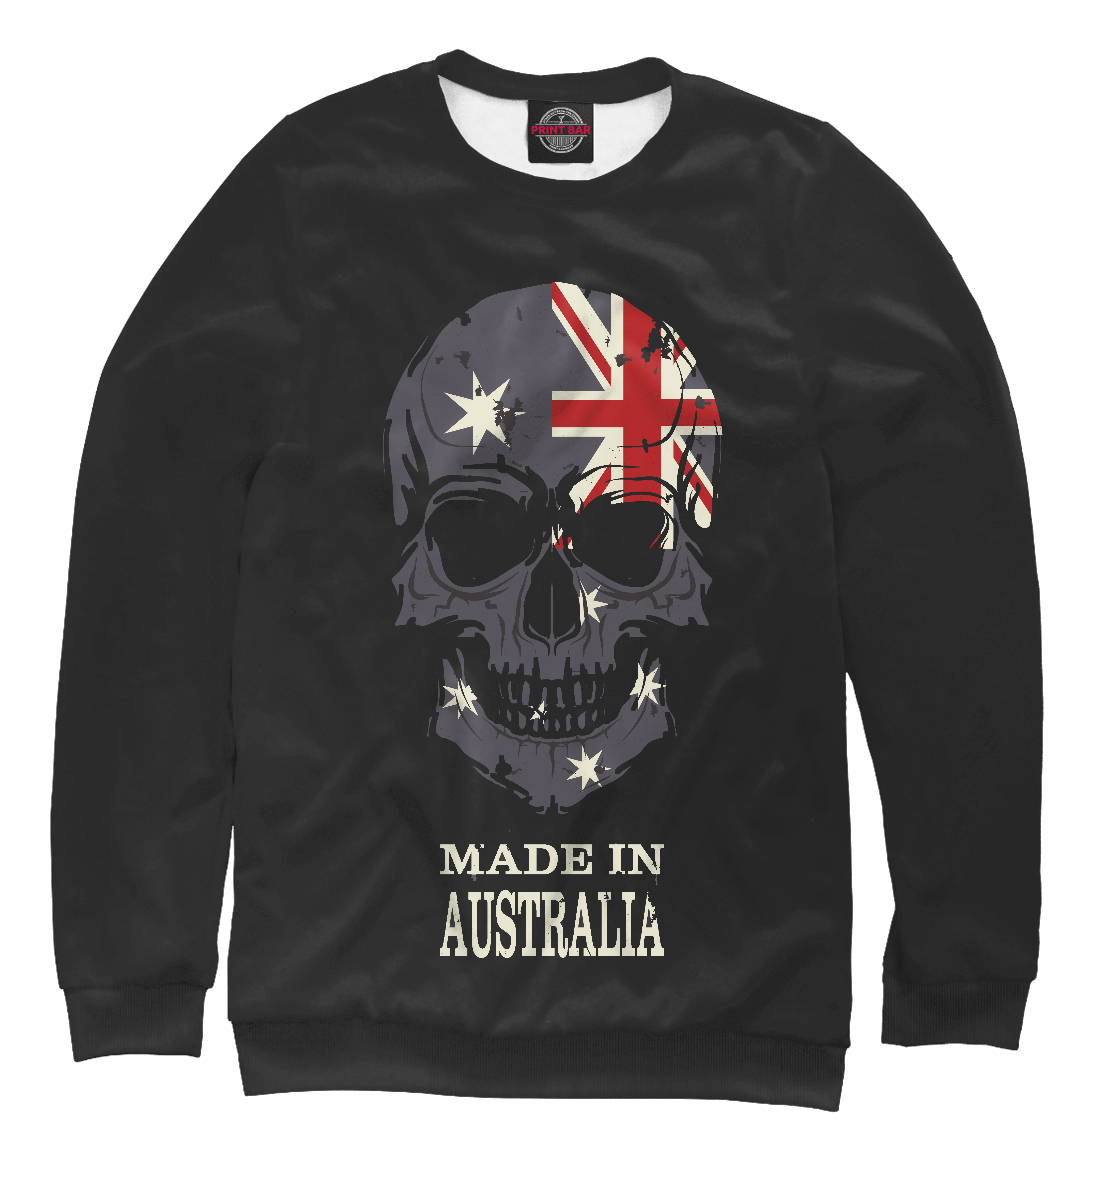 Made in Australia made in australia